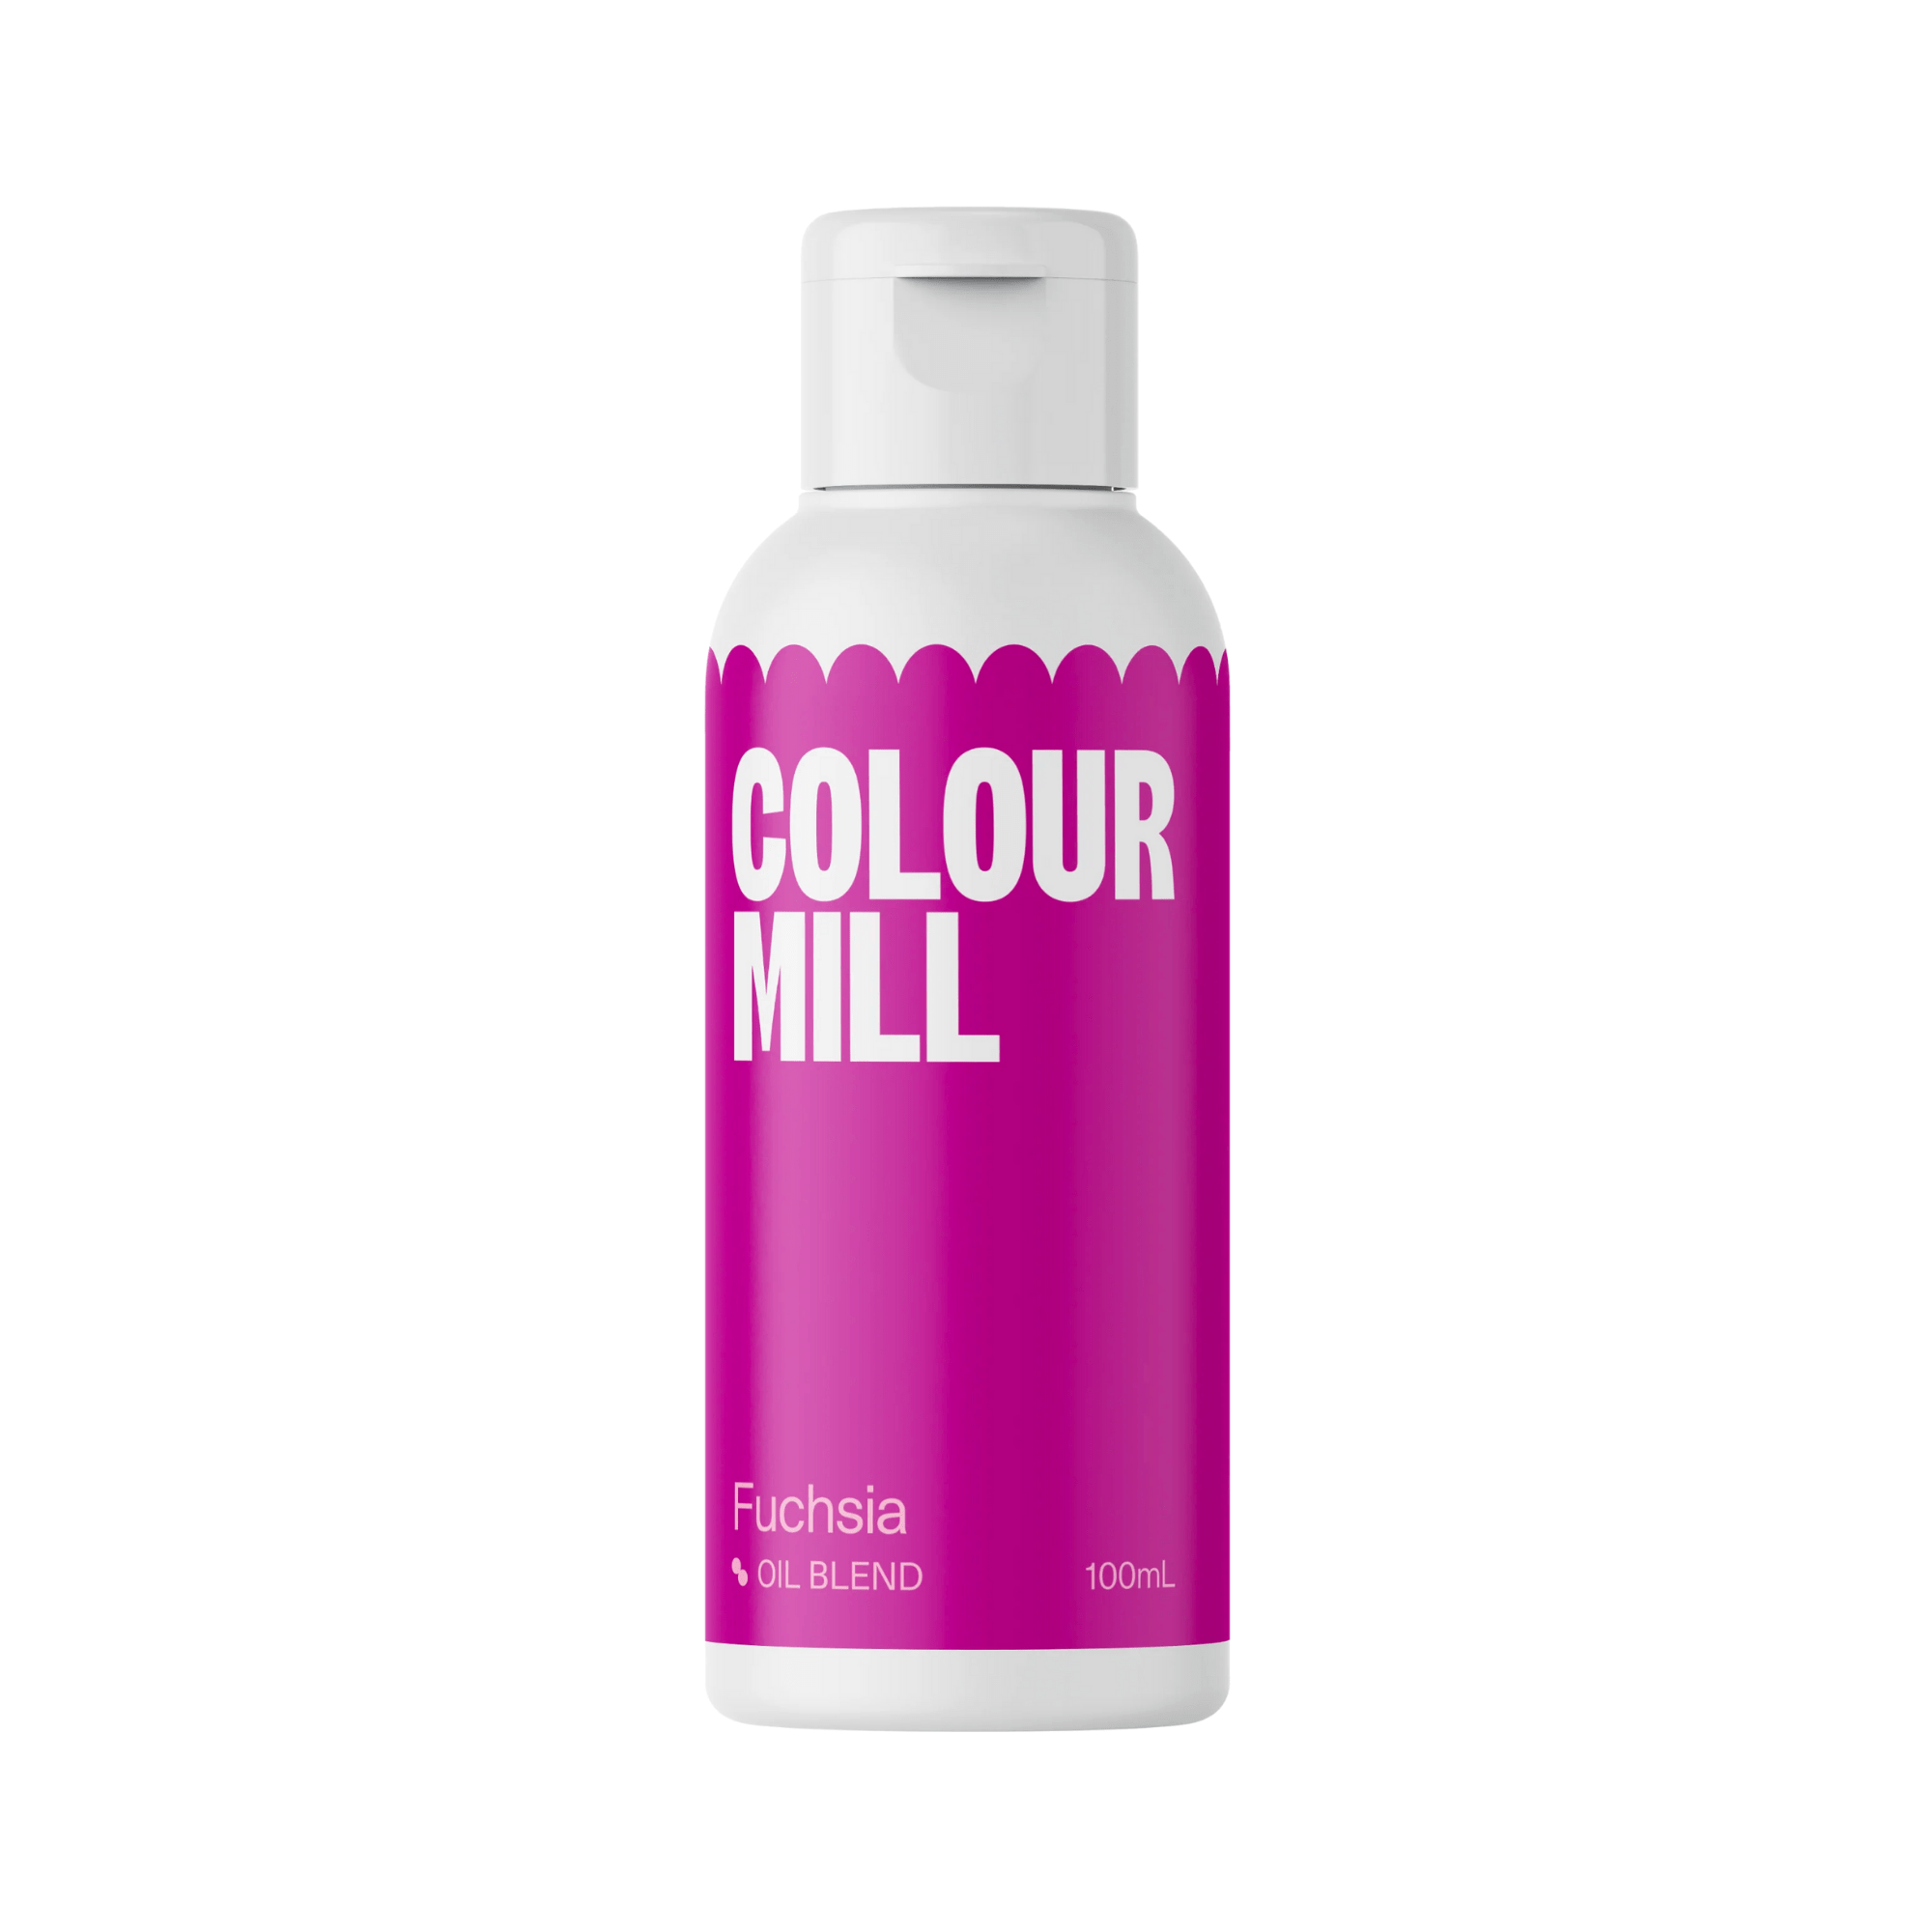 Happy Sprinkles Streusel 100ml Colour Mill Fuchsia - Oil Blend